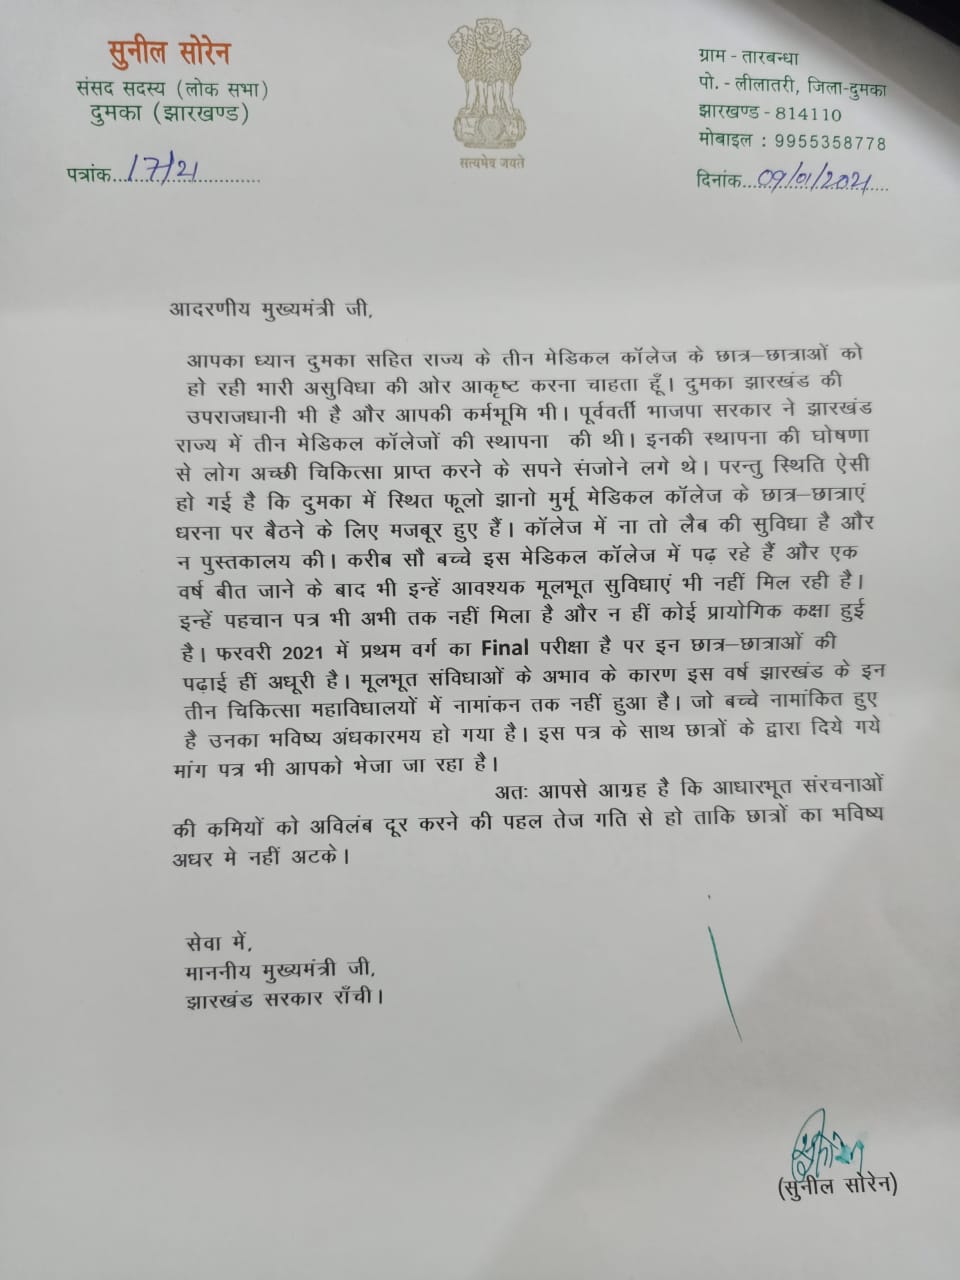 mp sunil soren wrote a letter to cm hemant in dumka